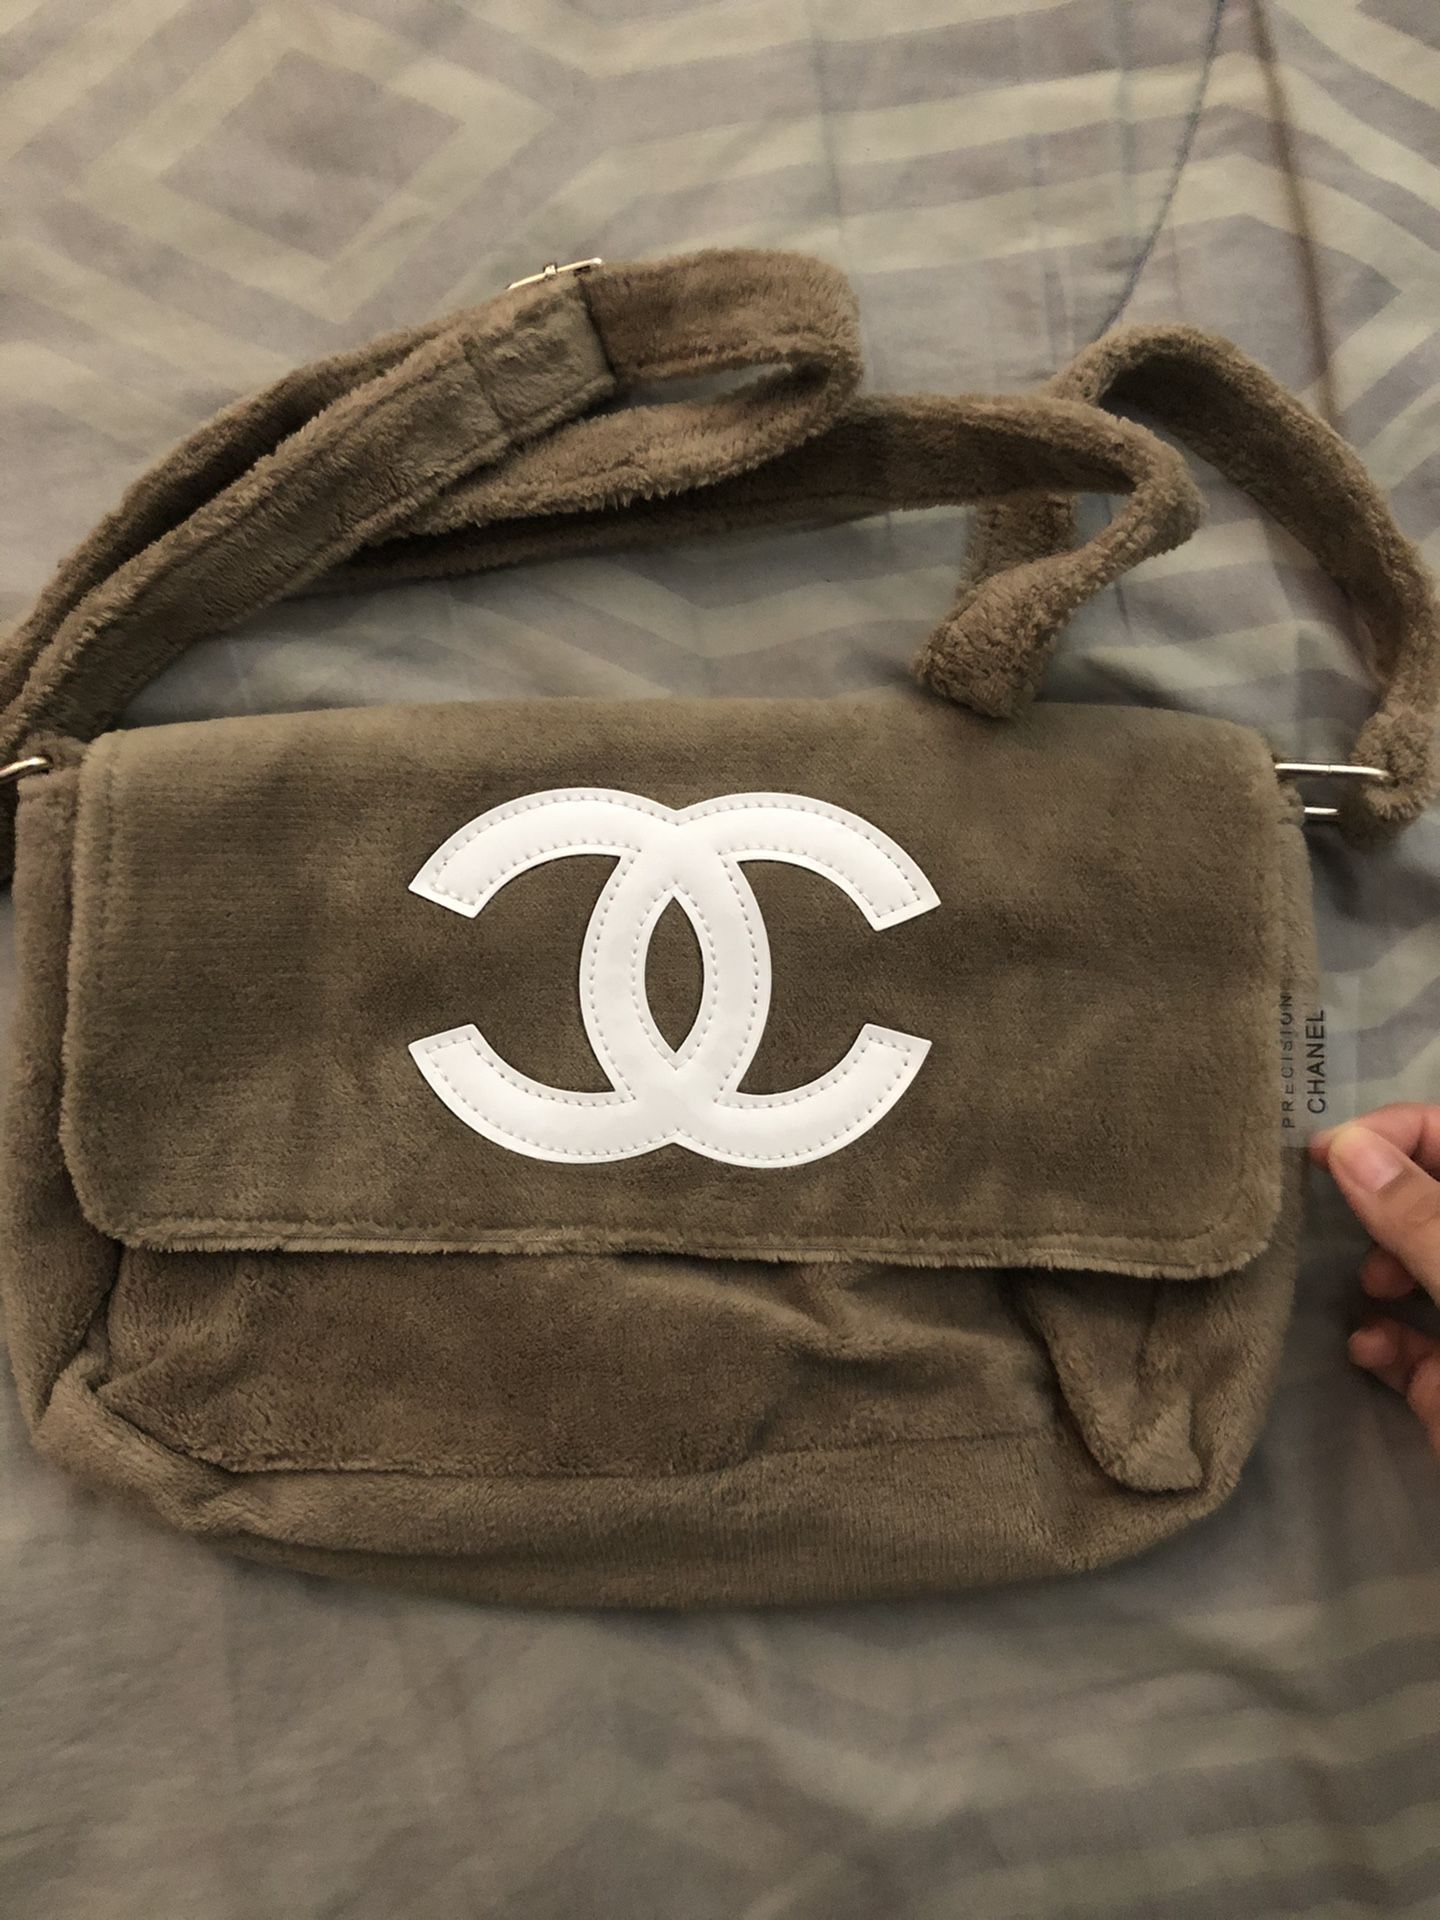 Cute Handbag/Purse/Bag